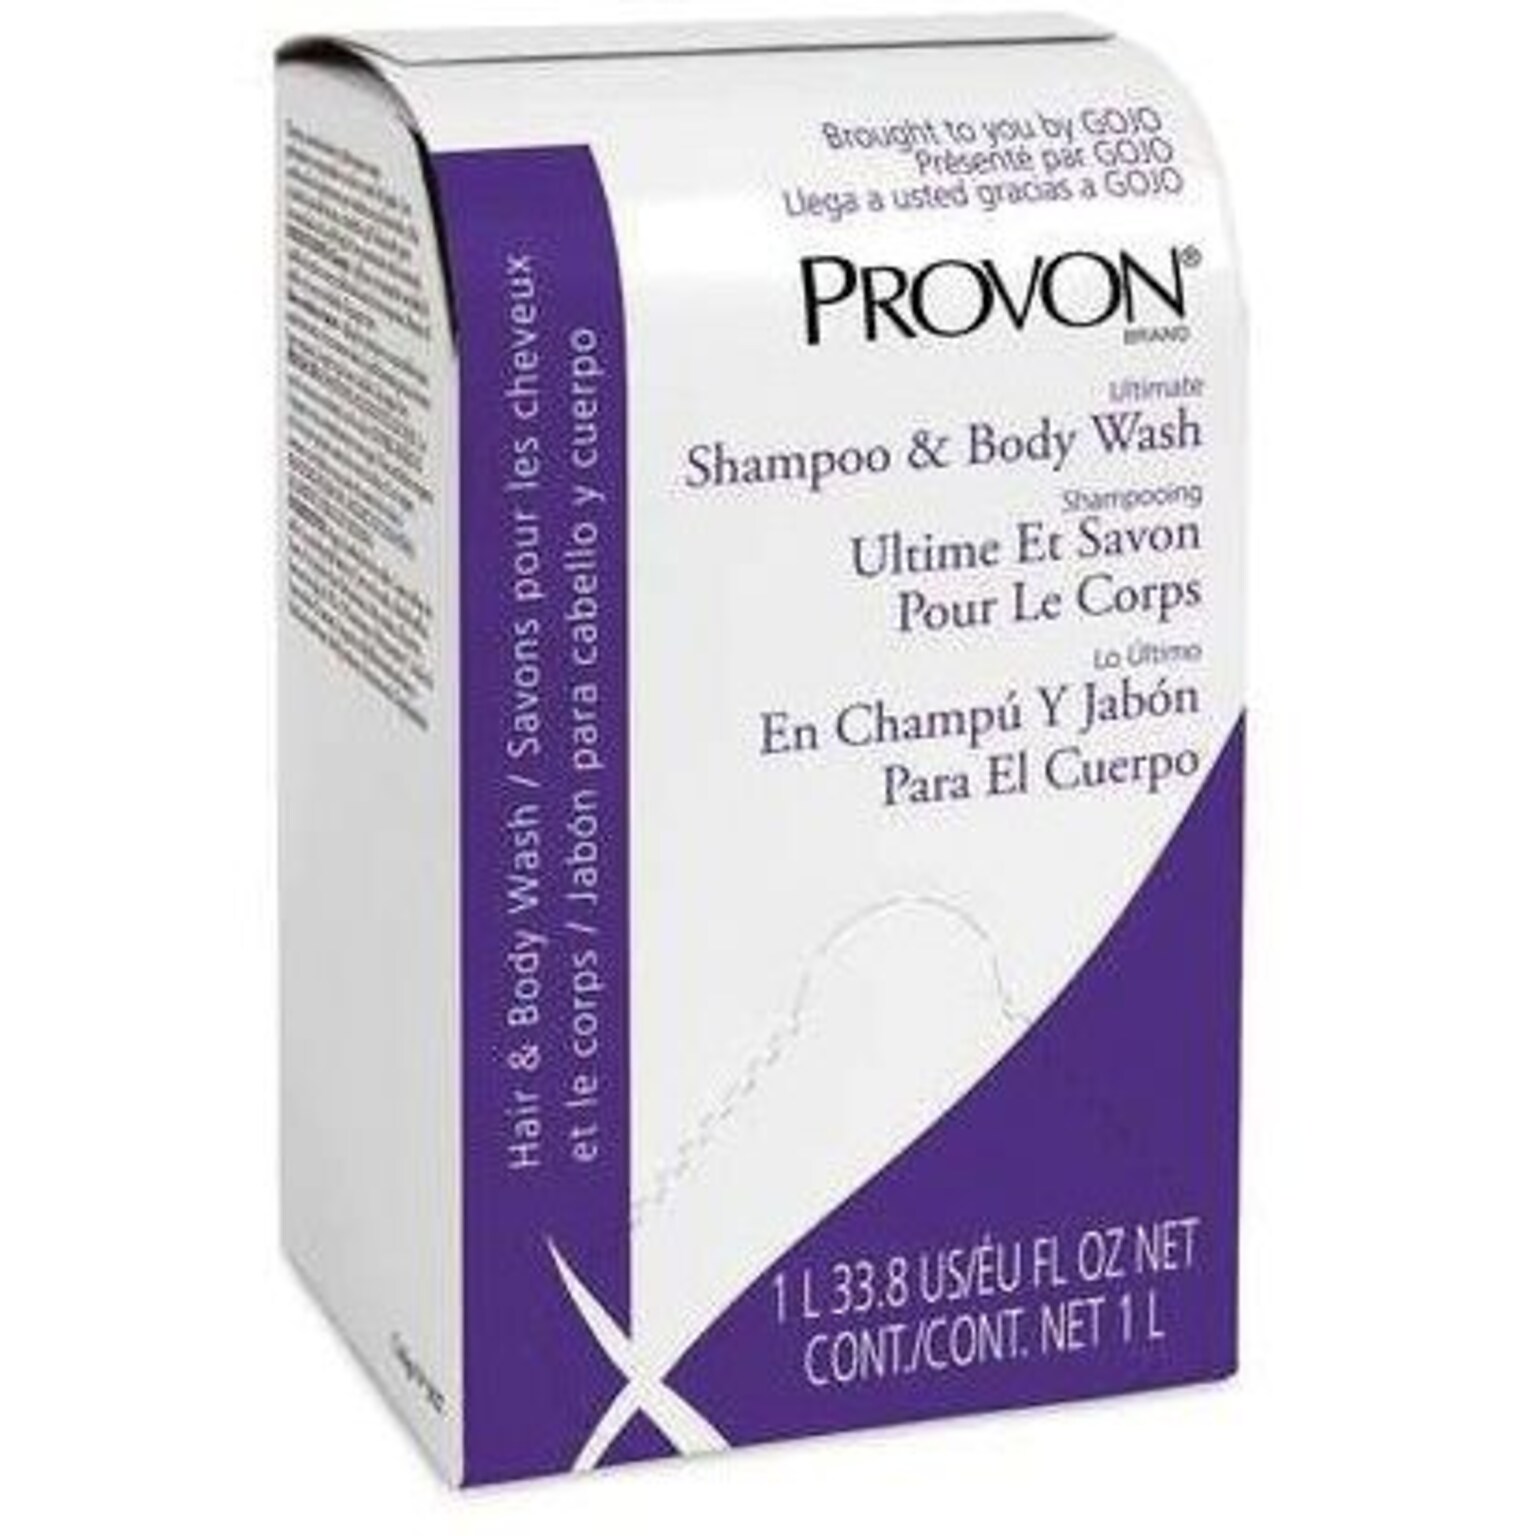 Provon NXT Ultimate Shampoo & Body Wash Refill, 1,000 ml (3127-08)